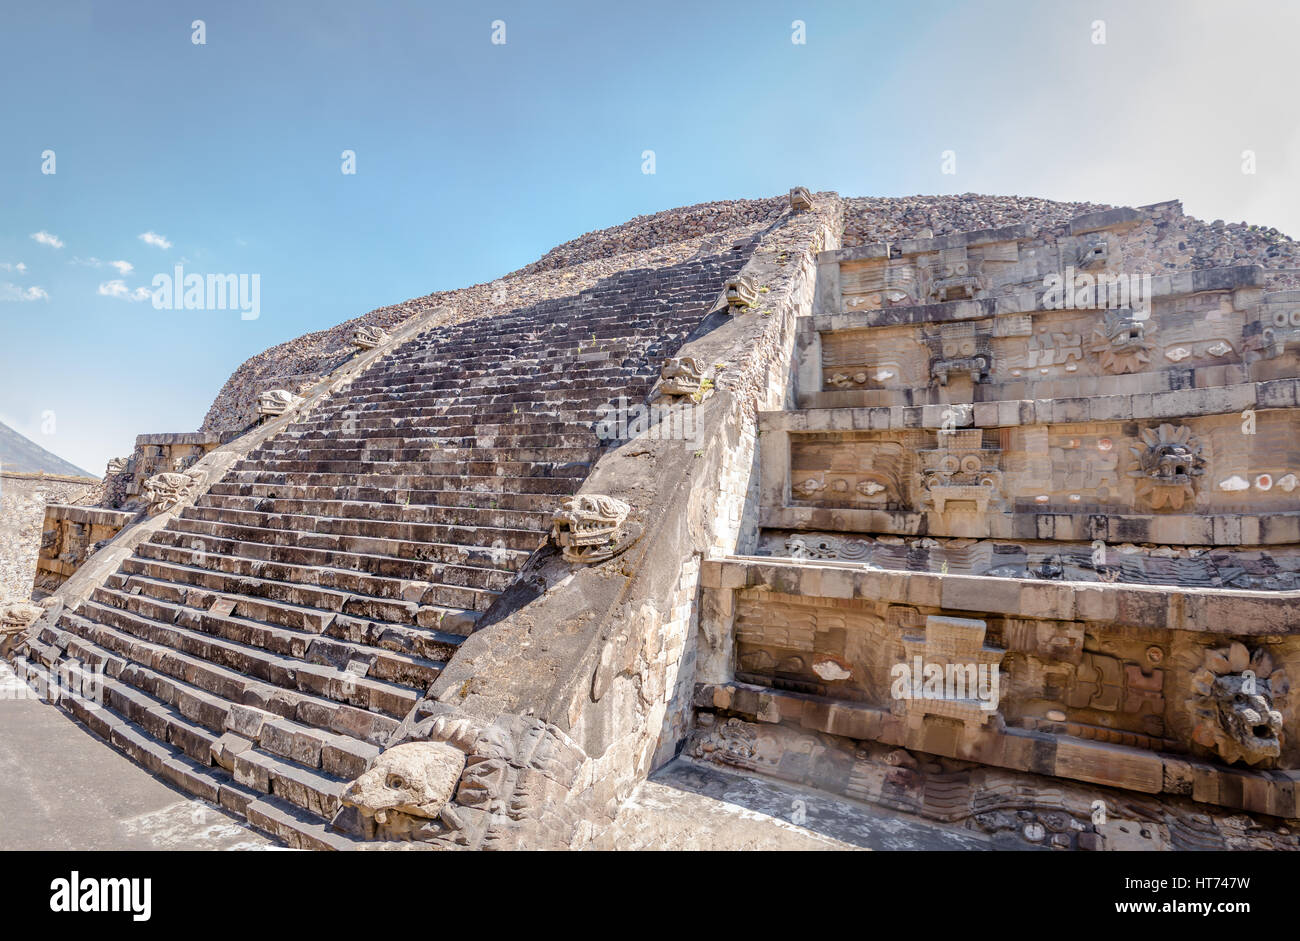 Quetzalcoatl Pyramid Temple at Teotihuacan Ruins - Mexico City, Mexico Stock Photo